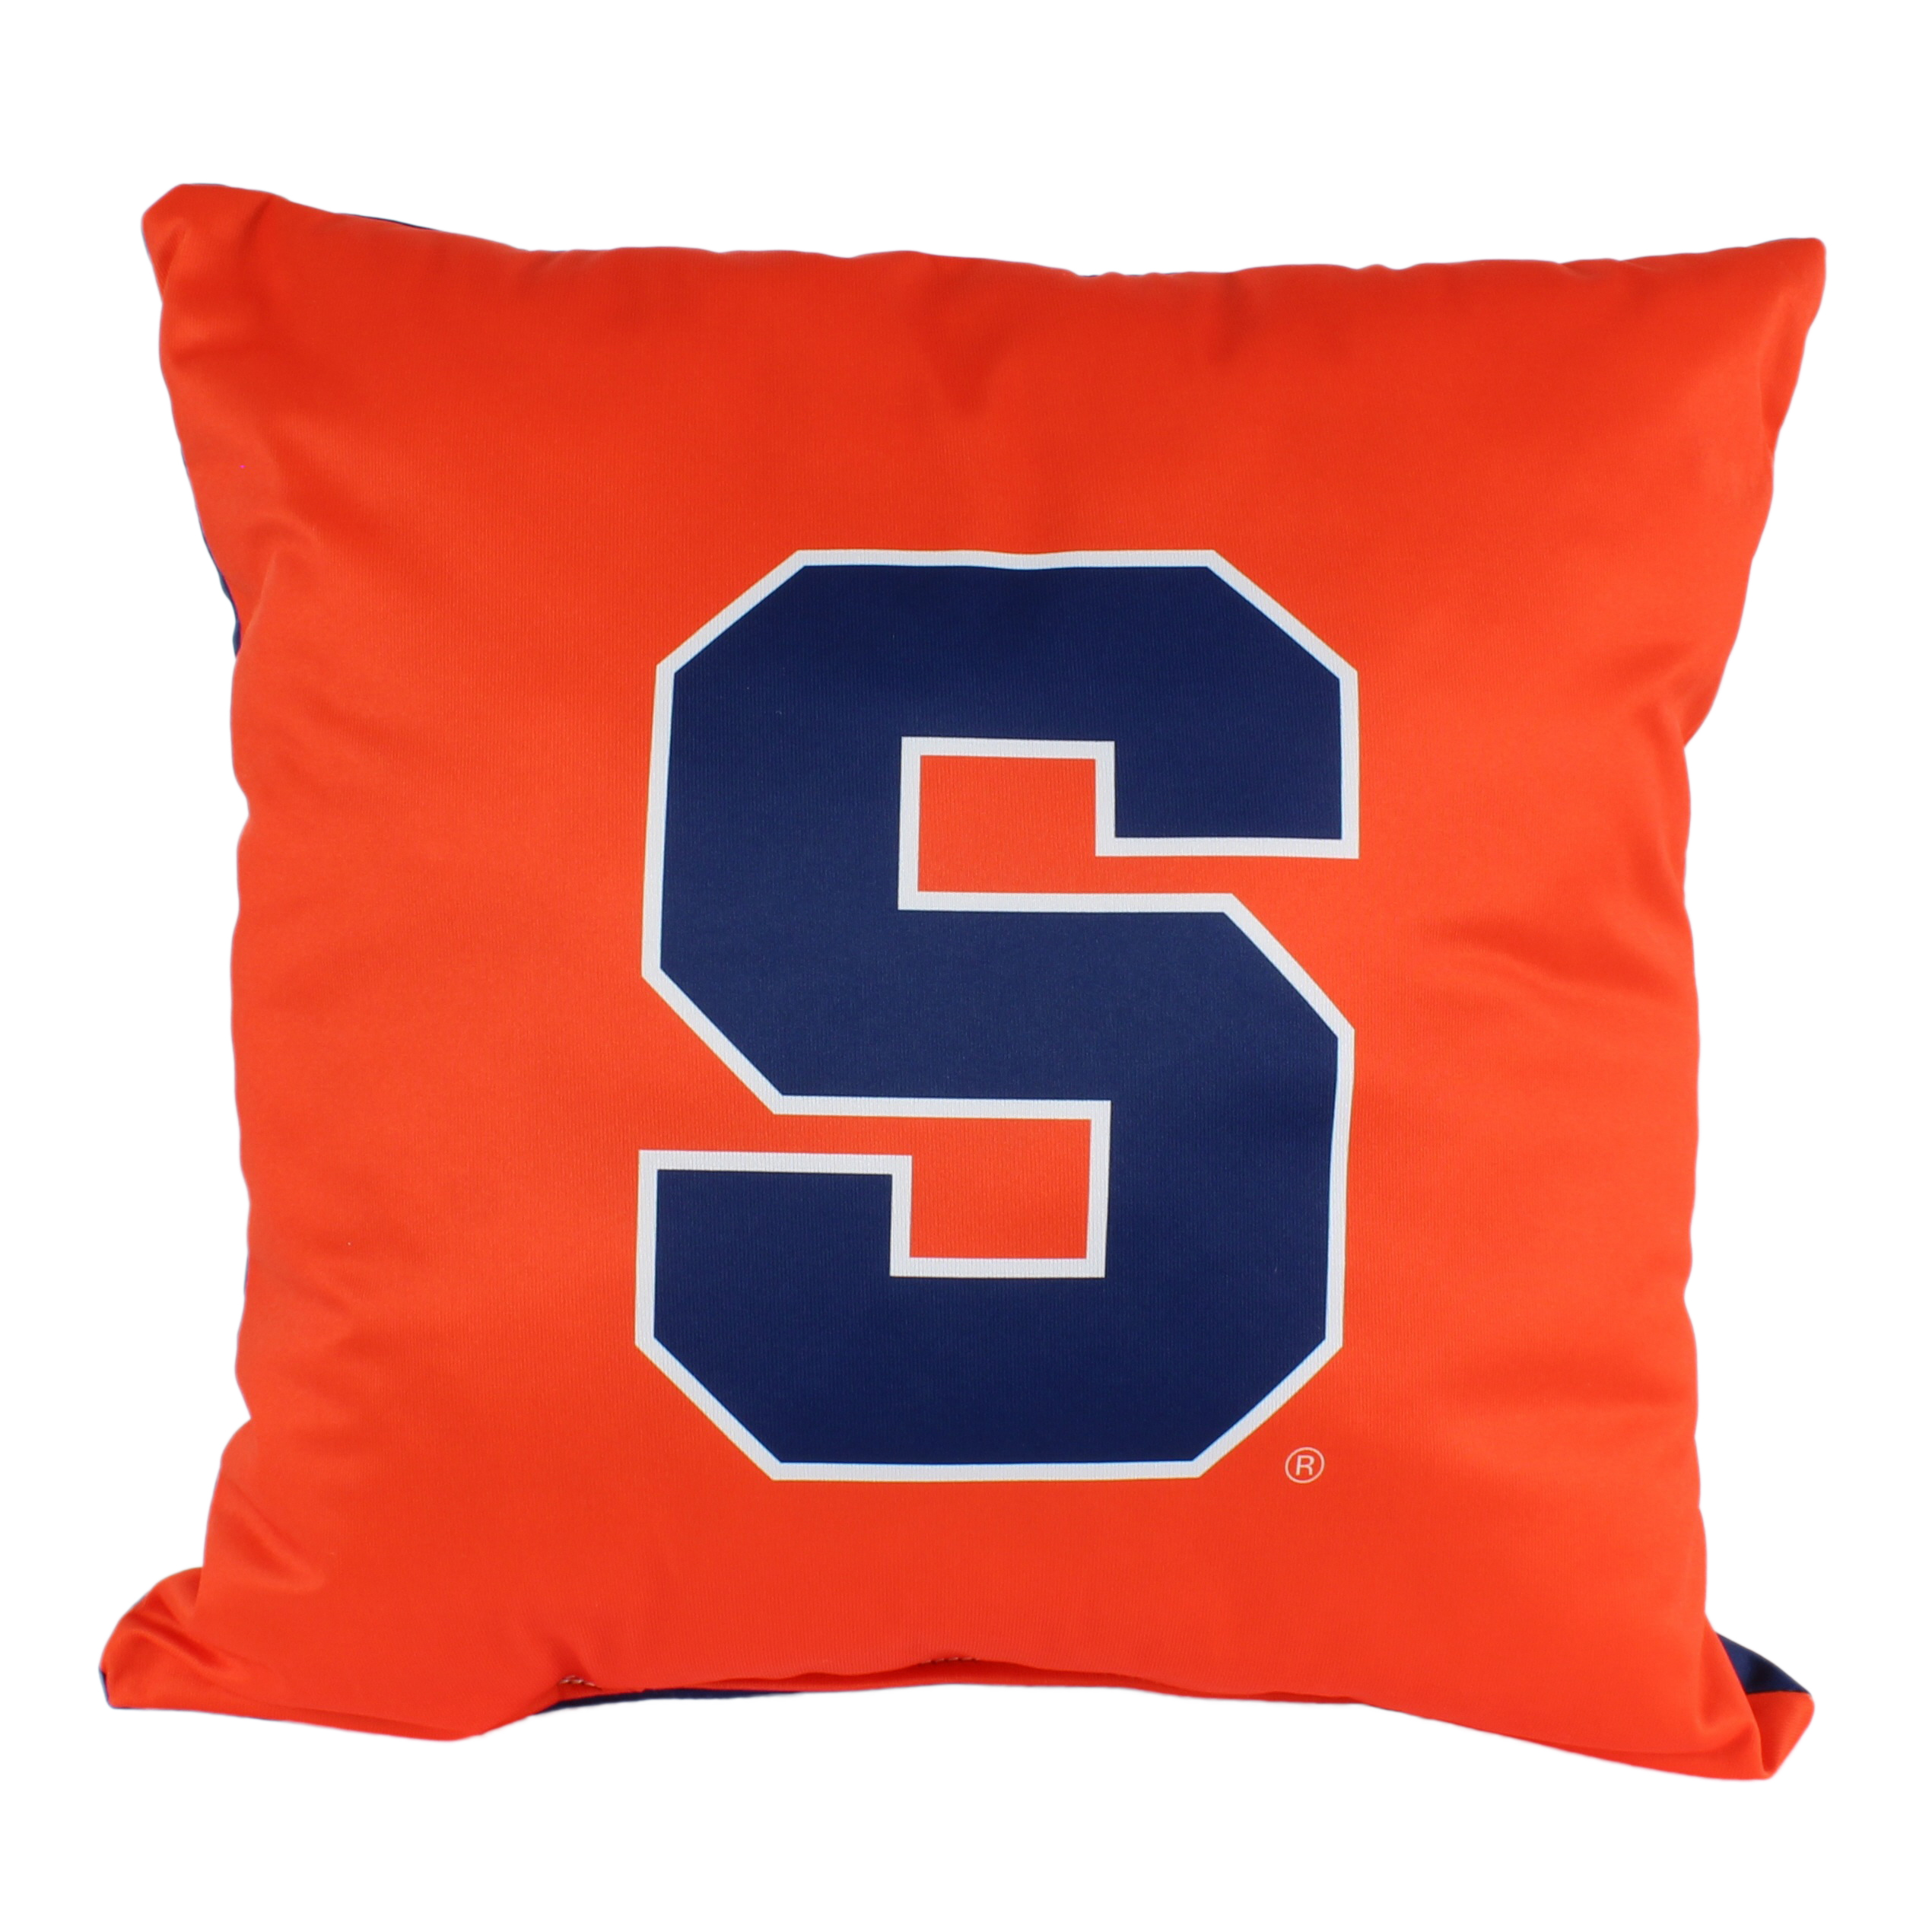 Syracuse Orange 16 inch Reversible Decorative Pillow - image 1 of 4